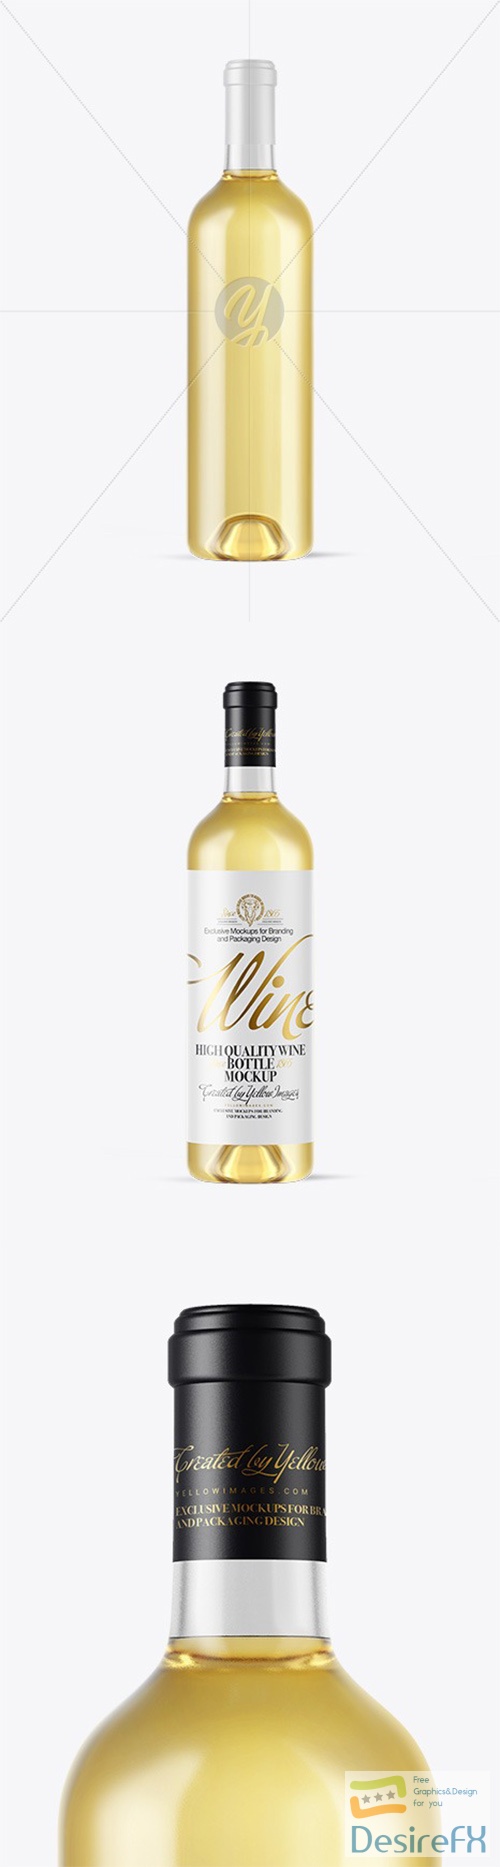 Clear Glass White Wine Bottle Mockup 48167